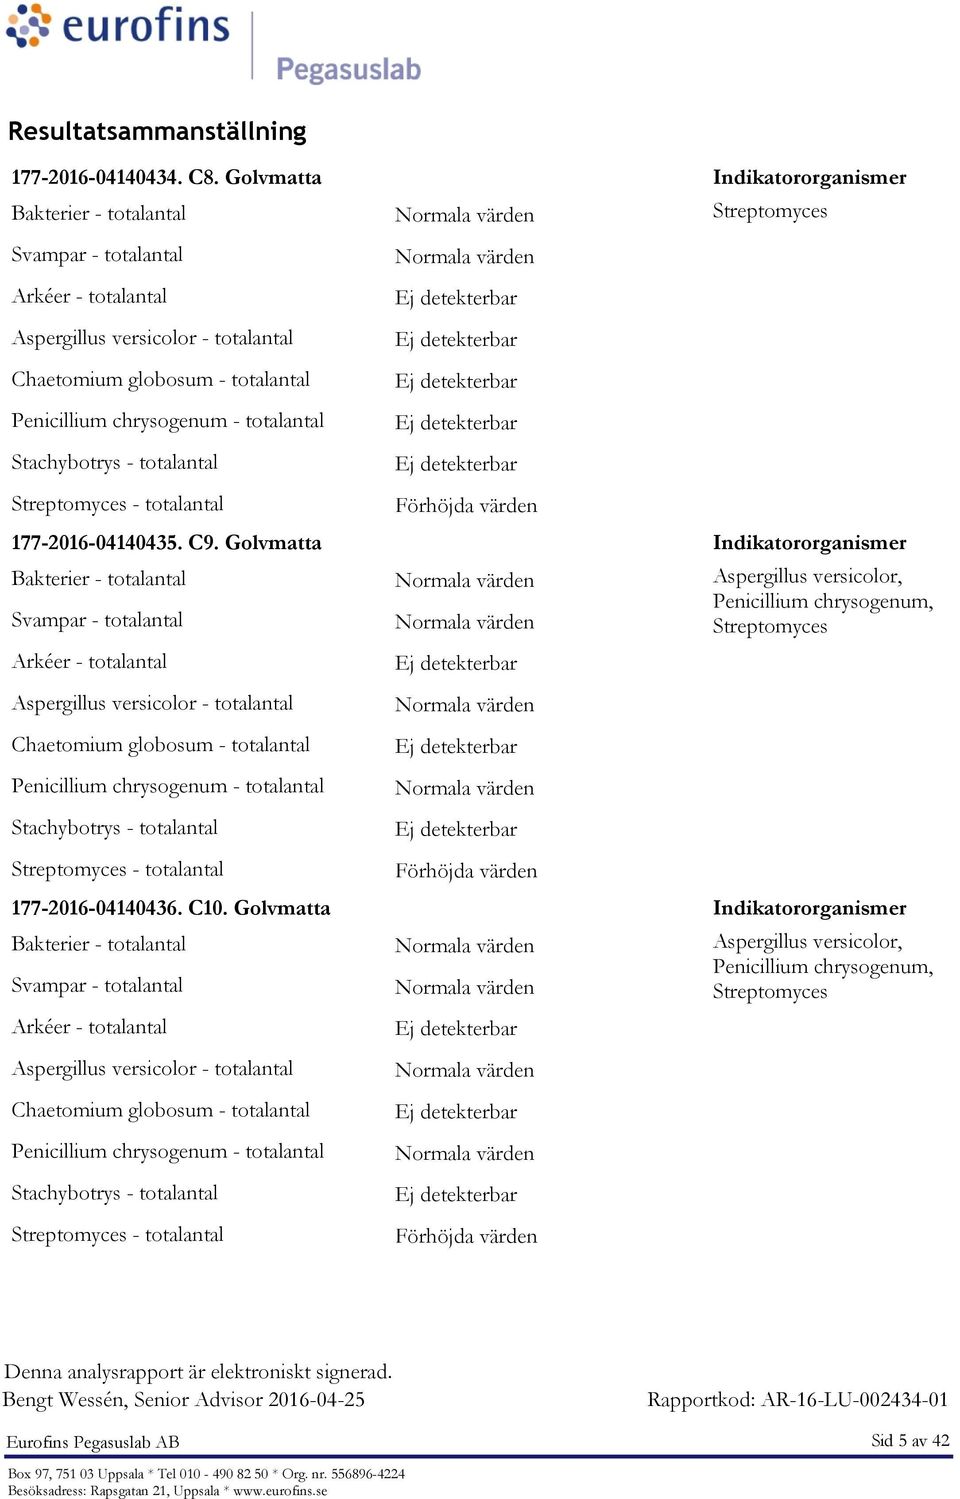 Indikatororganismer, Penicillium chrysogenum, - totalantal - totalantal